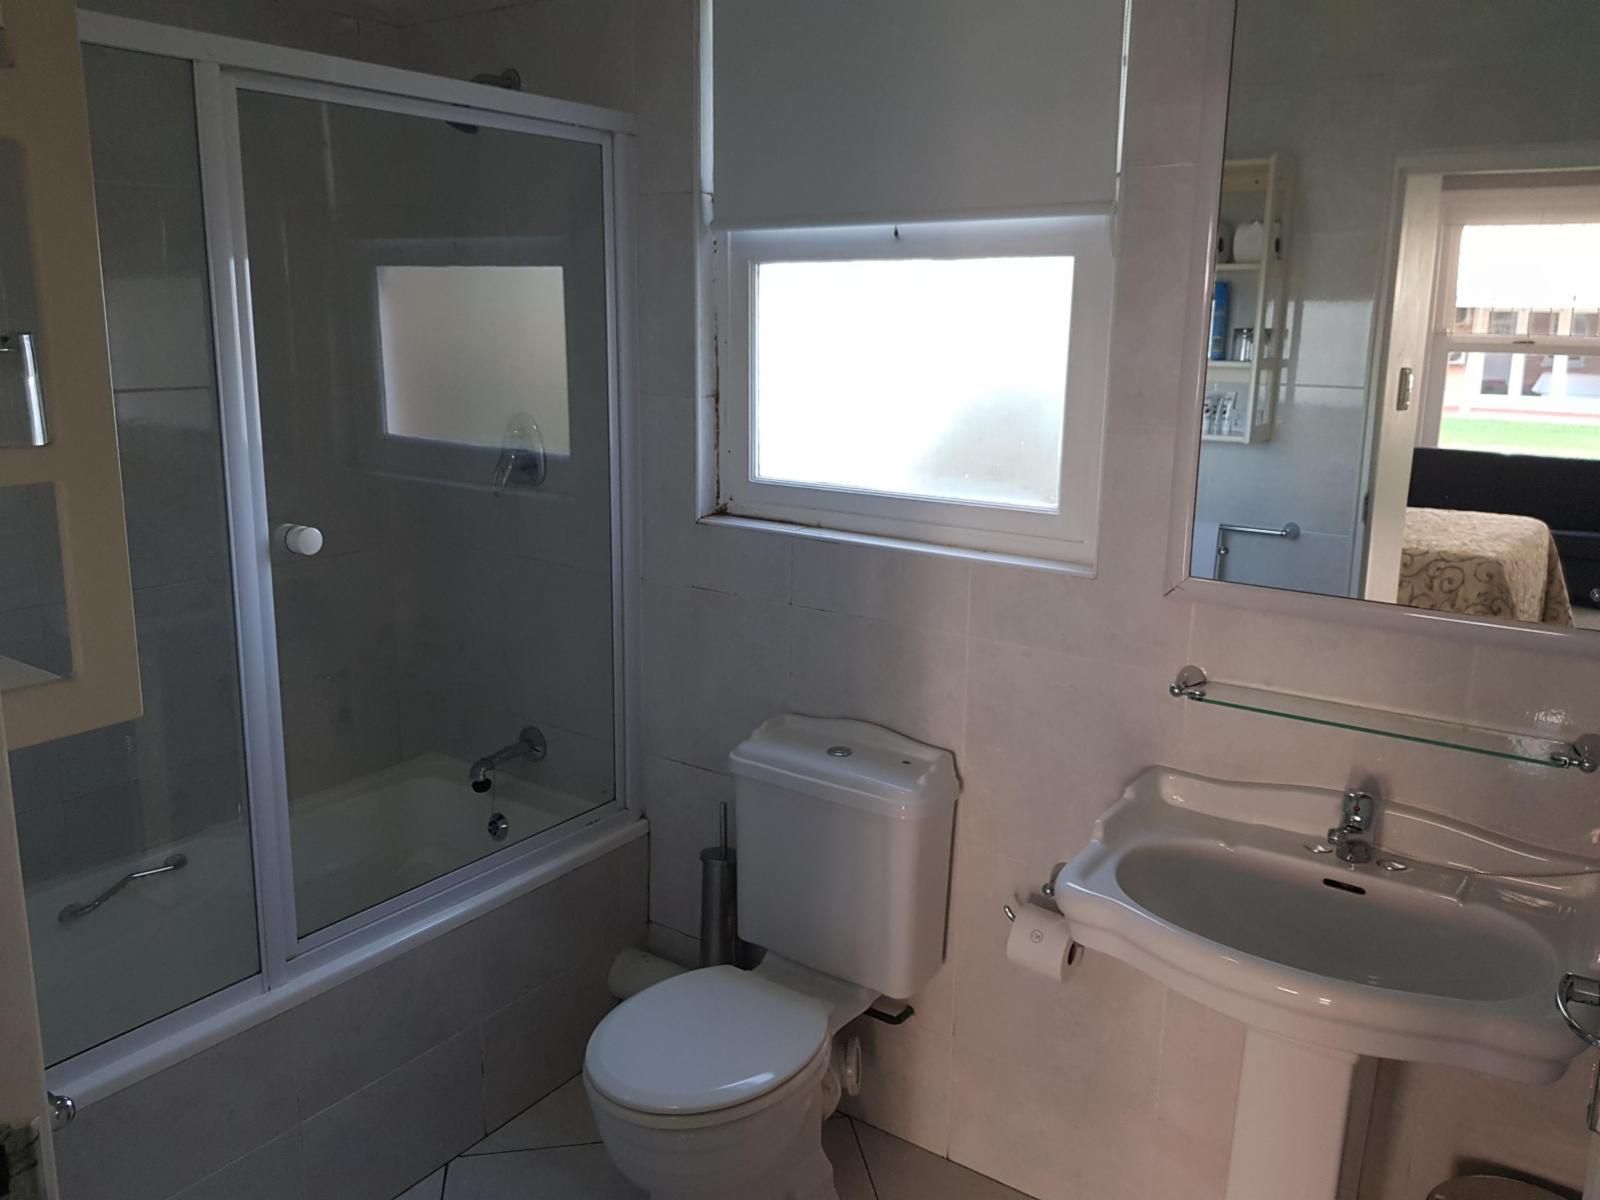 Sica S Guest House Westridge Durban Kwazulu Natal South Africa Unsaturated, Bathroom